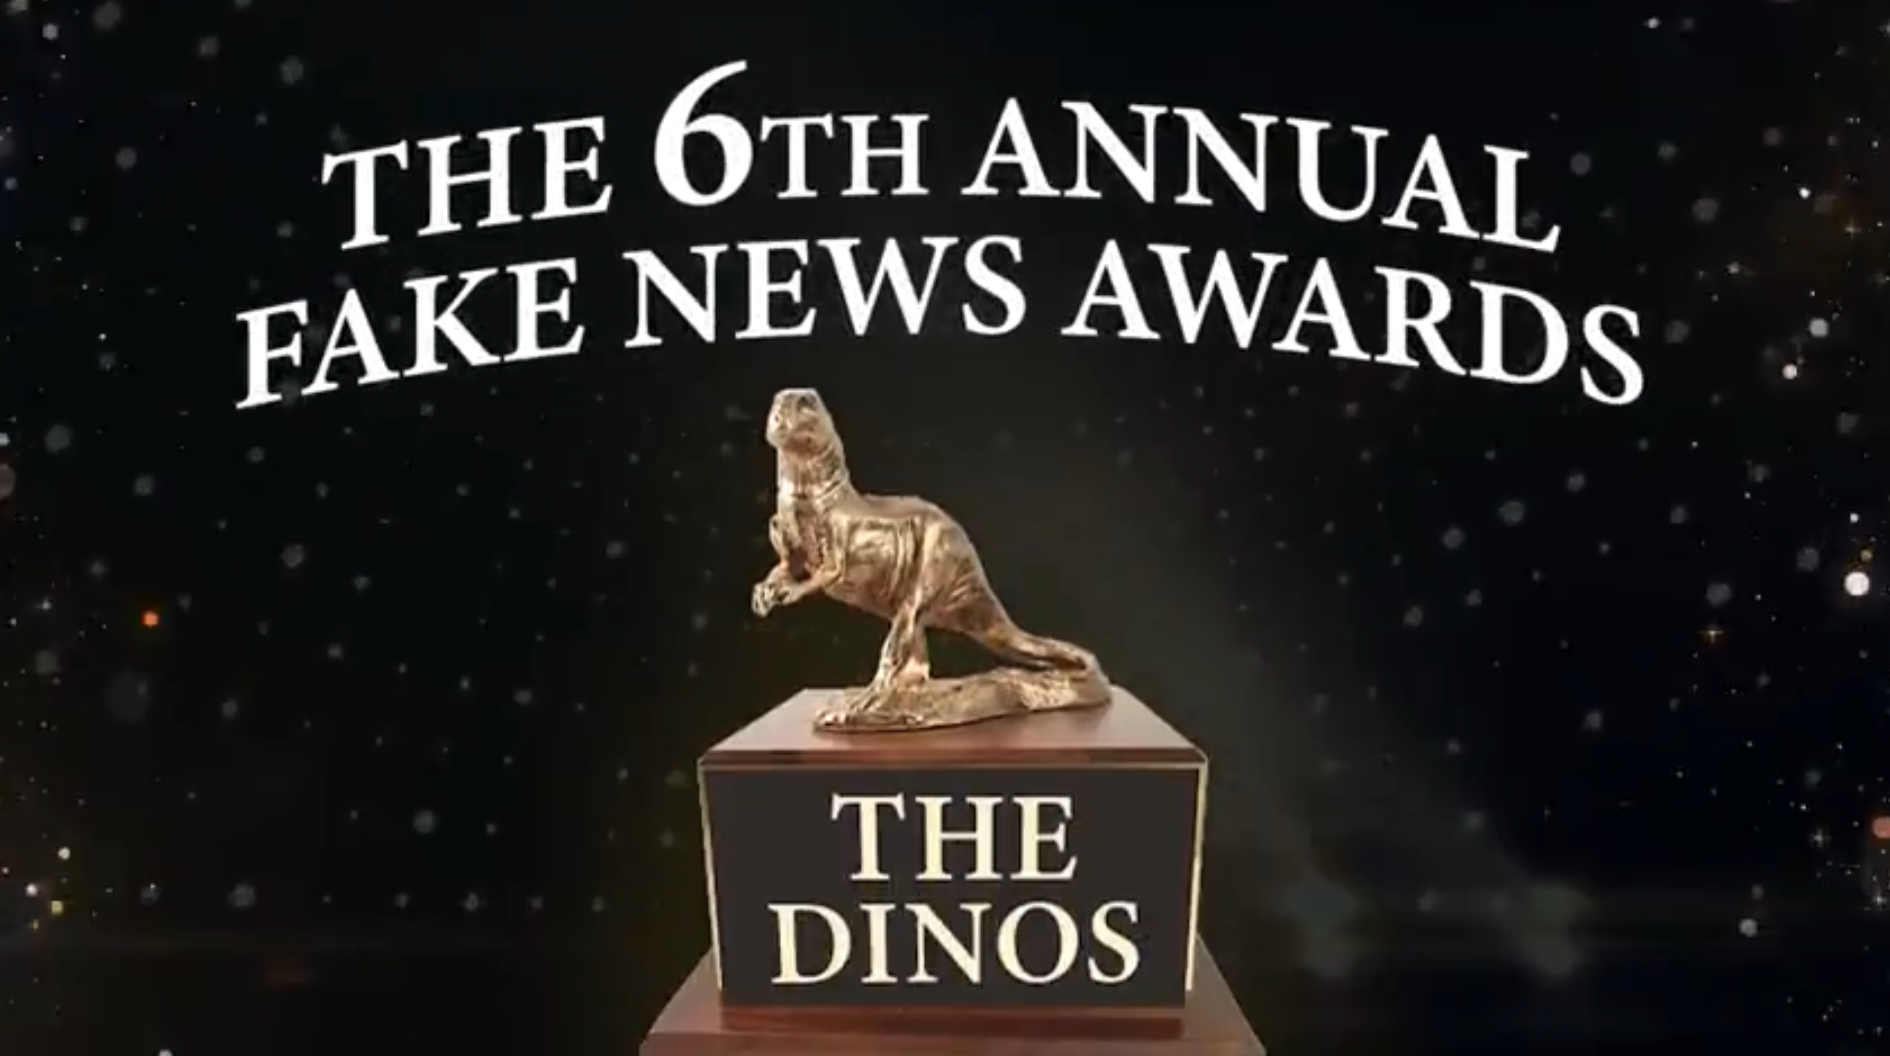 6th Annual Fake News Awards - The DINOs by CorebettReport.com